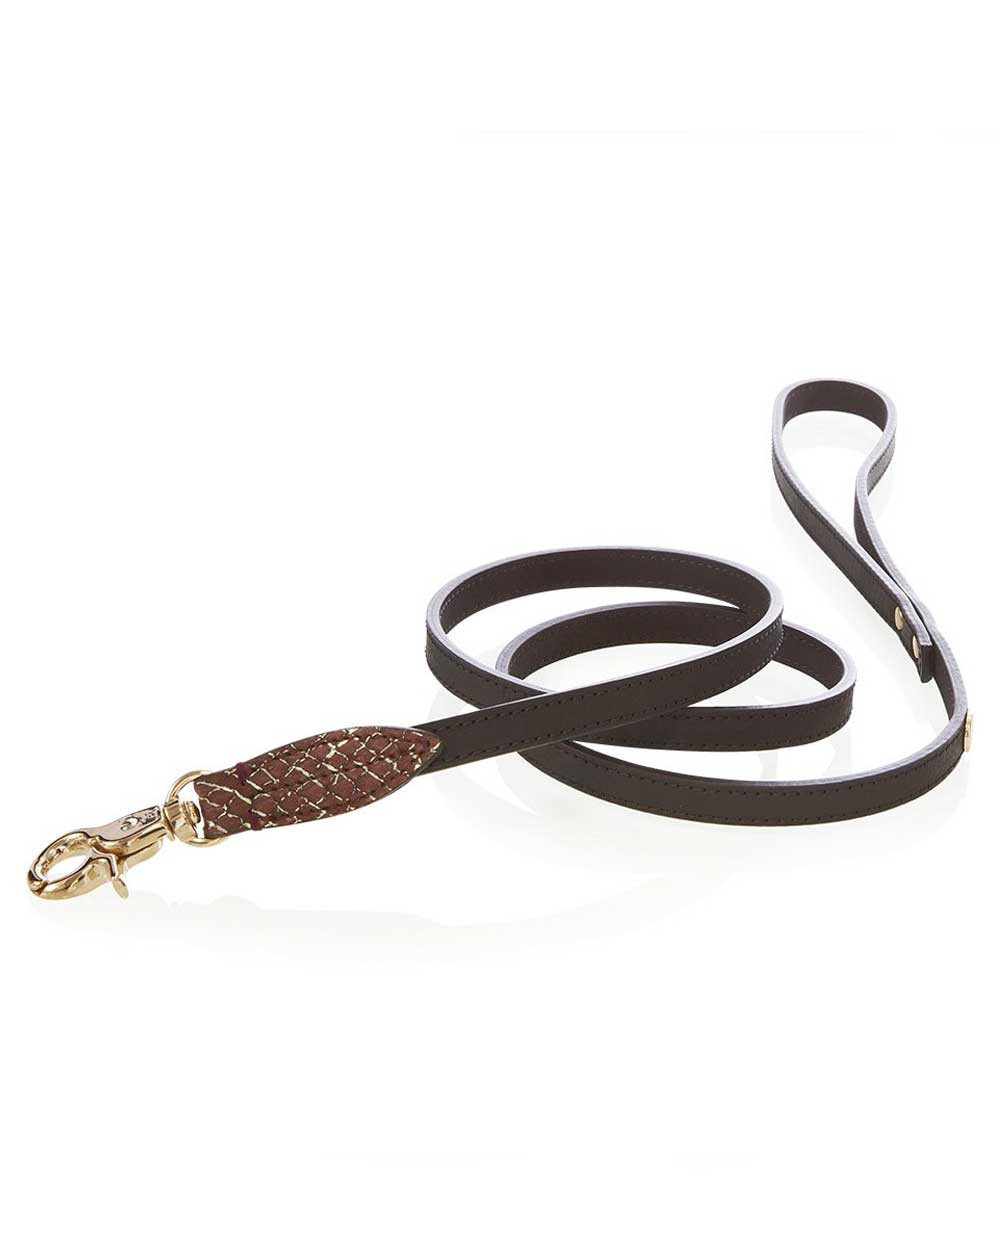 Luxury dog leash - Made in Europe